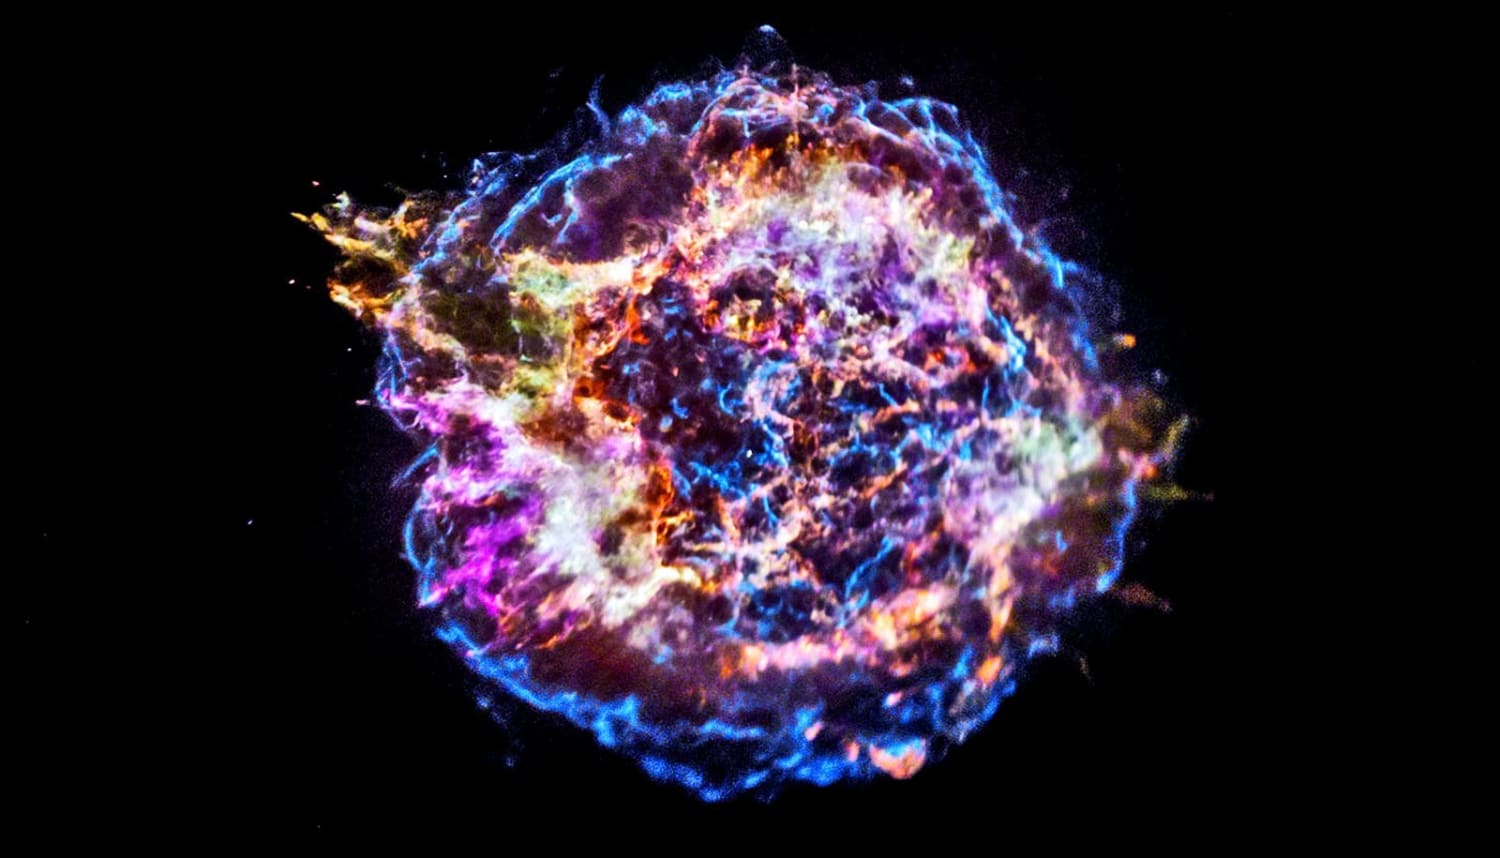 Supernova finding blows up an elemental origin theory